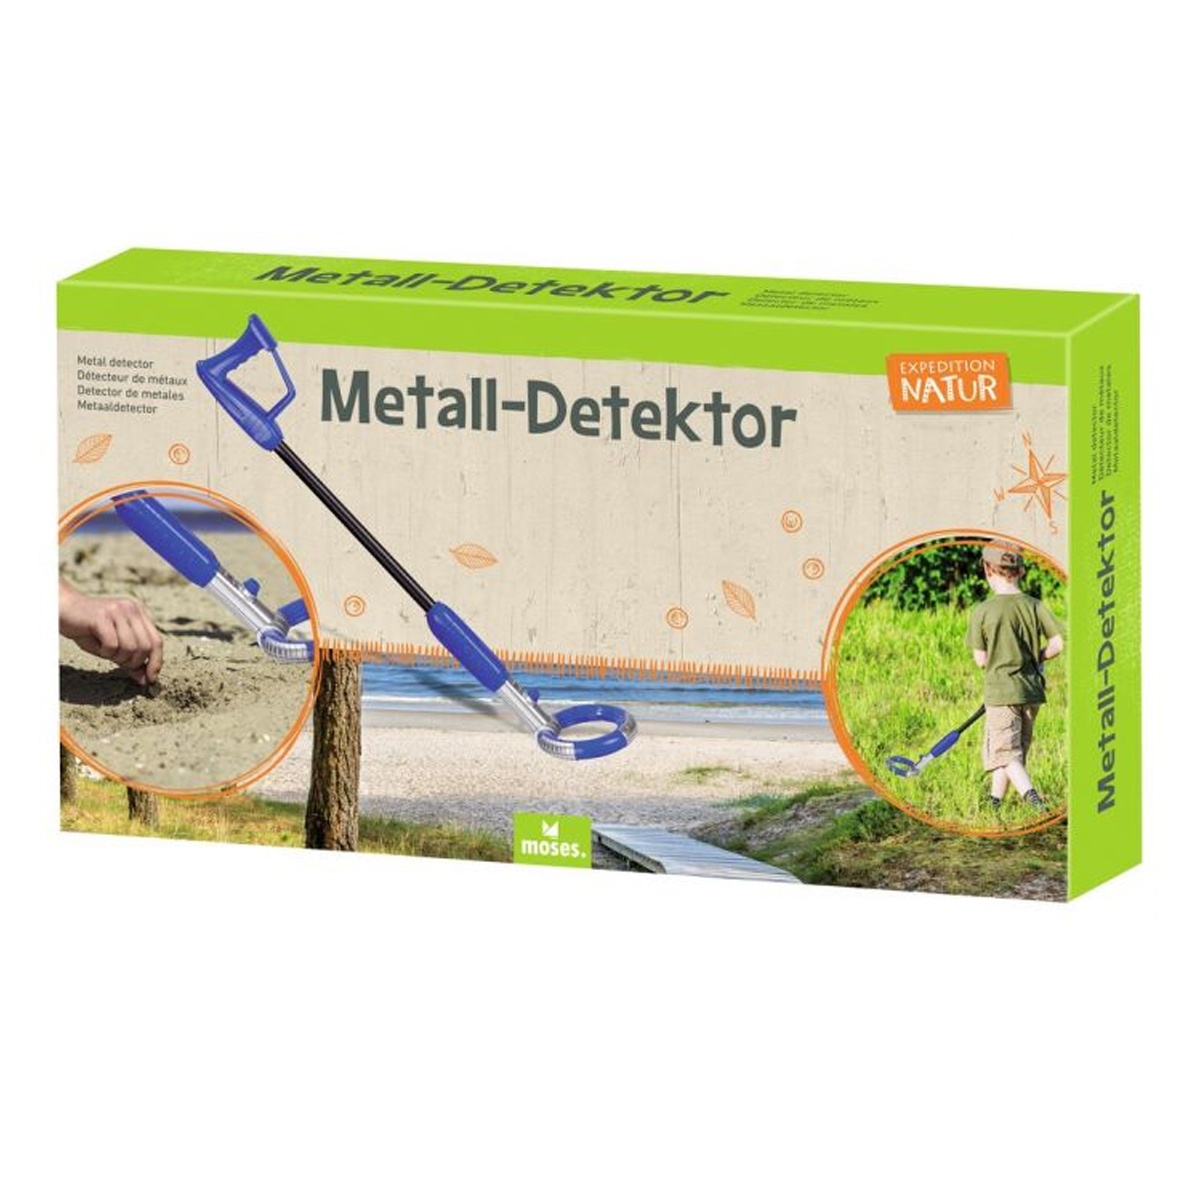 Expedition Natur Metall Detektor von moses